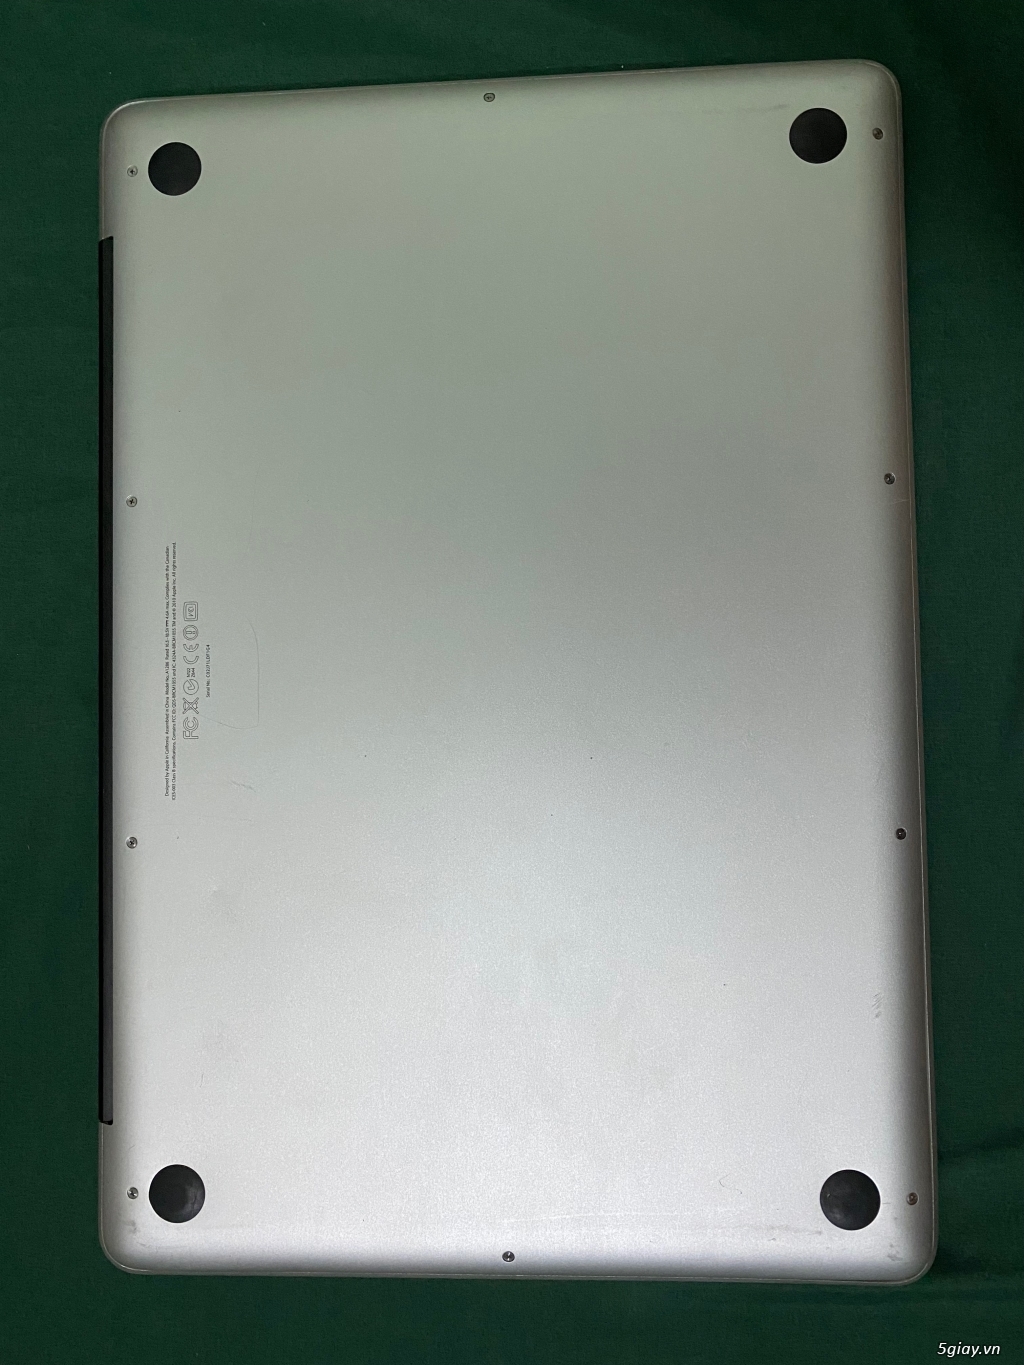 HCM - Cần bán Macbook Pro 15' Mid 2012 - Model A1286 (8,000,000) - 7